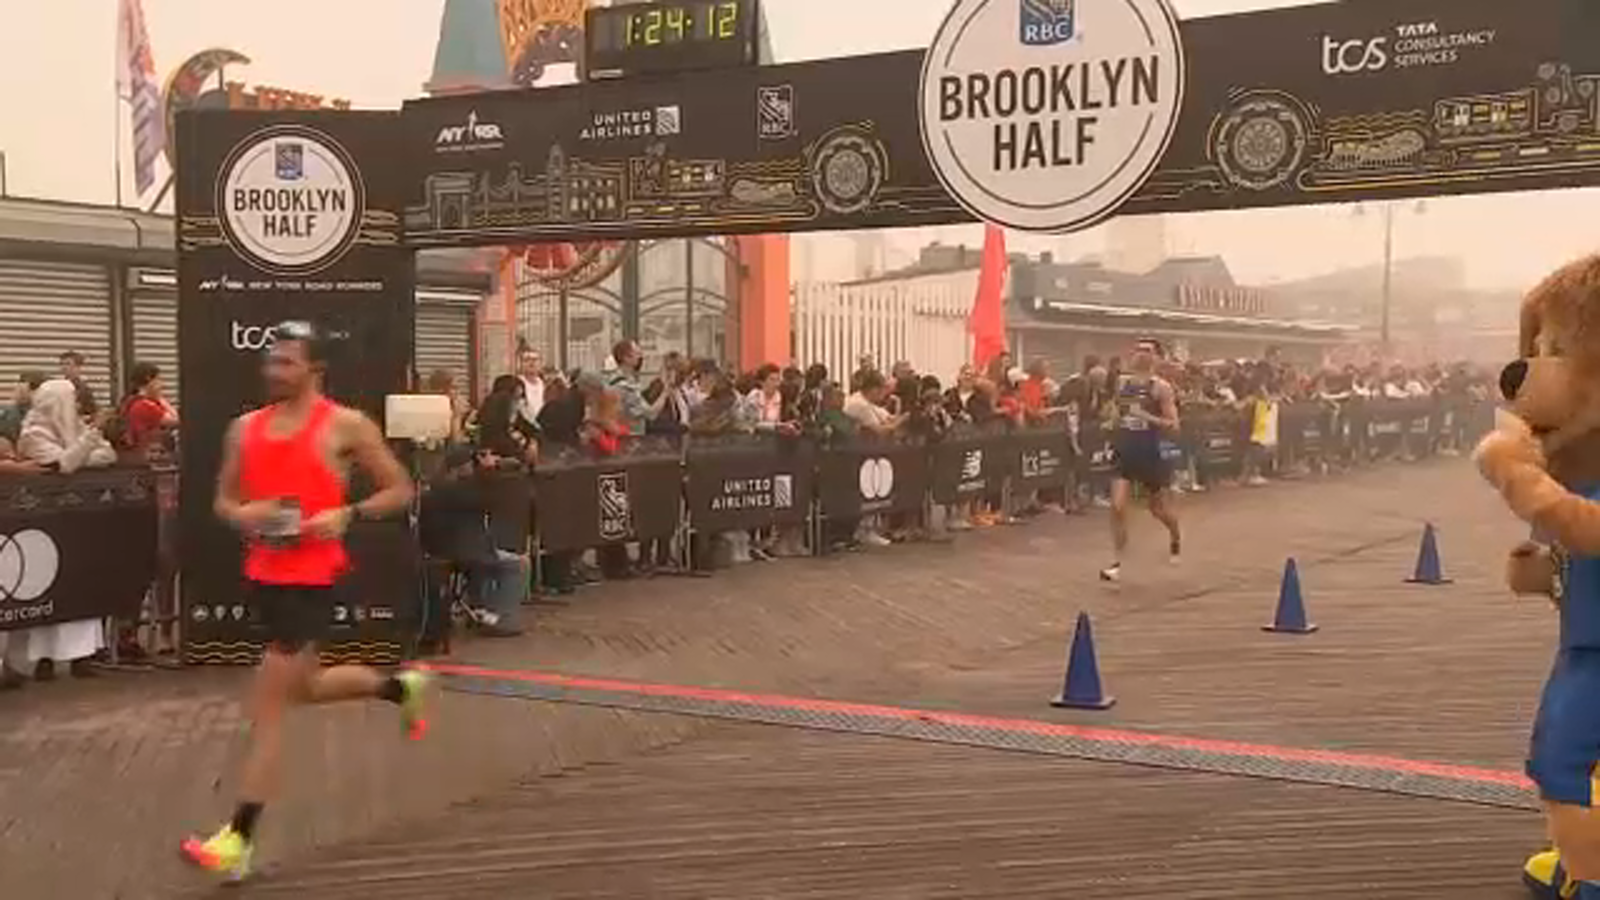 Brooklyn Half Marathon 2022 Runner dies after collapsing at finish